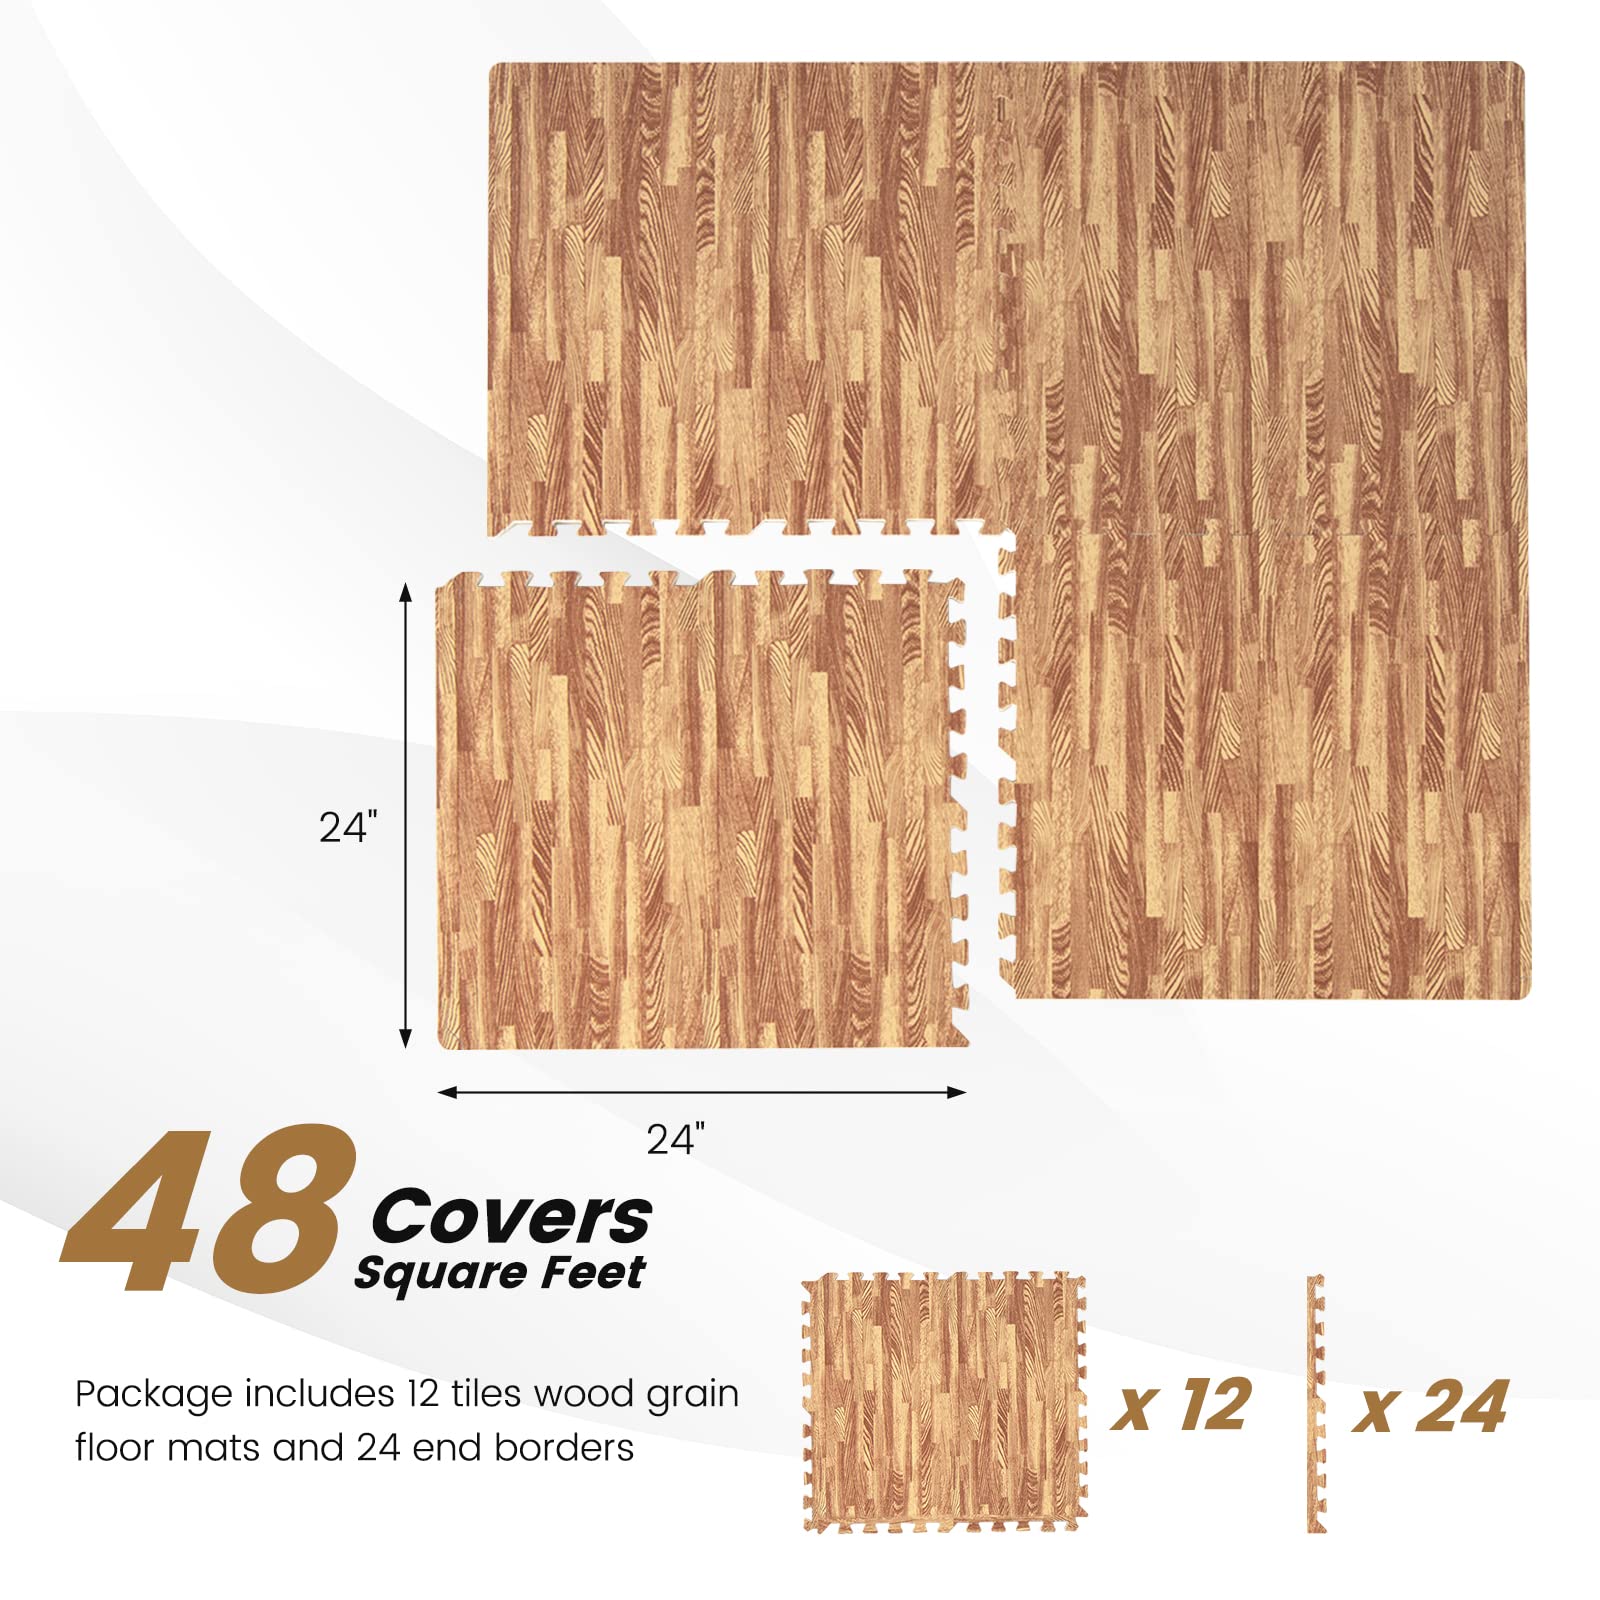 Giantex Foam Floor Tiles, 12 pcs Interlocking Foam Tiles with 24 Edge Pieces